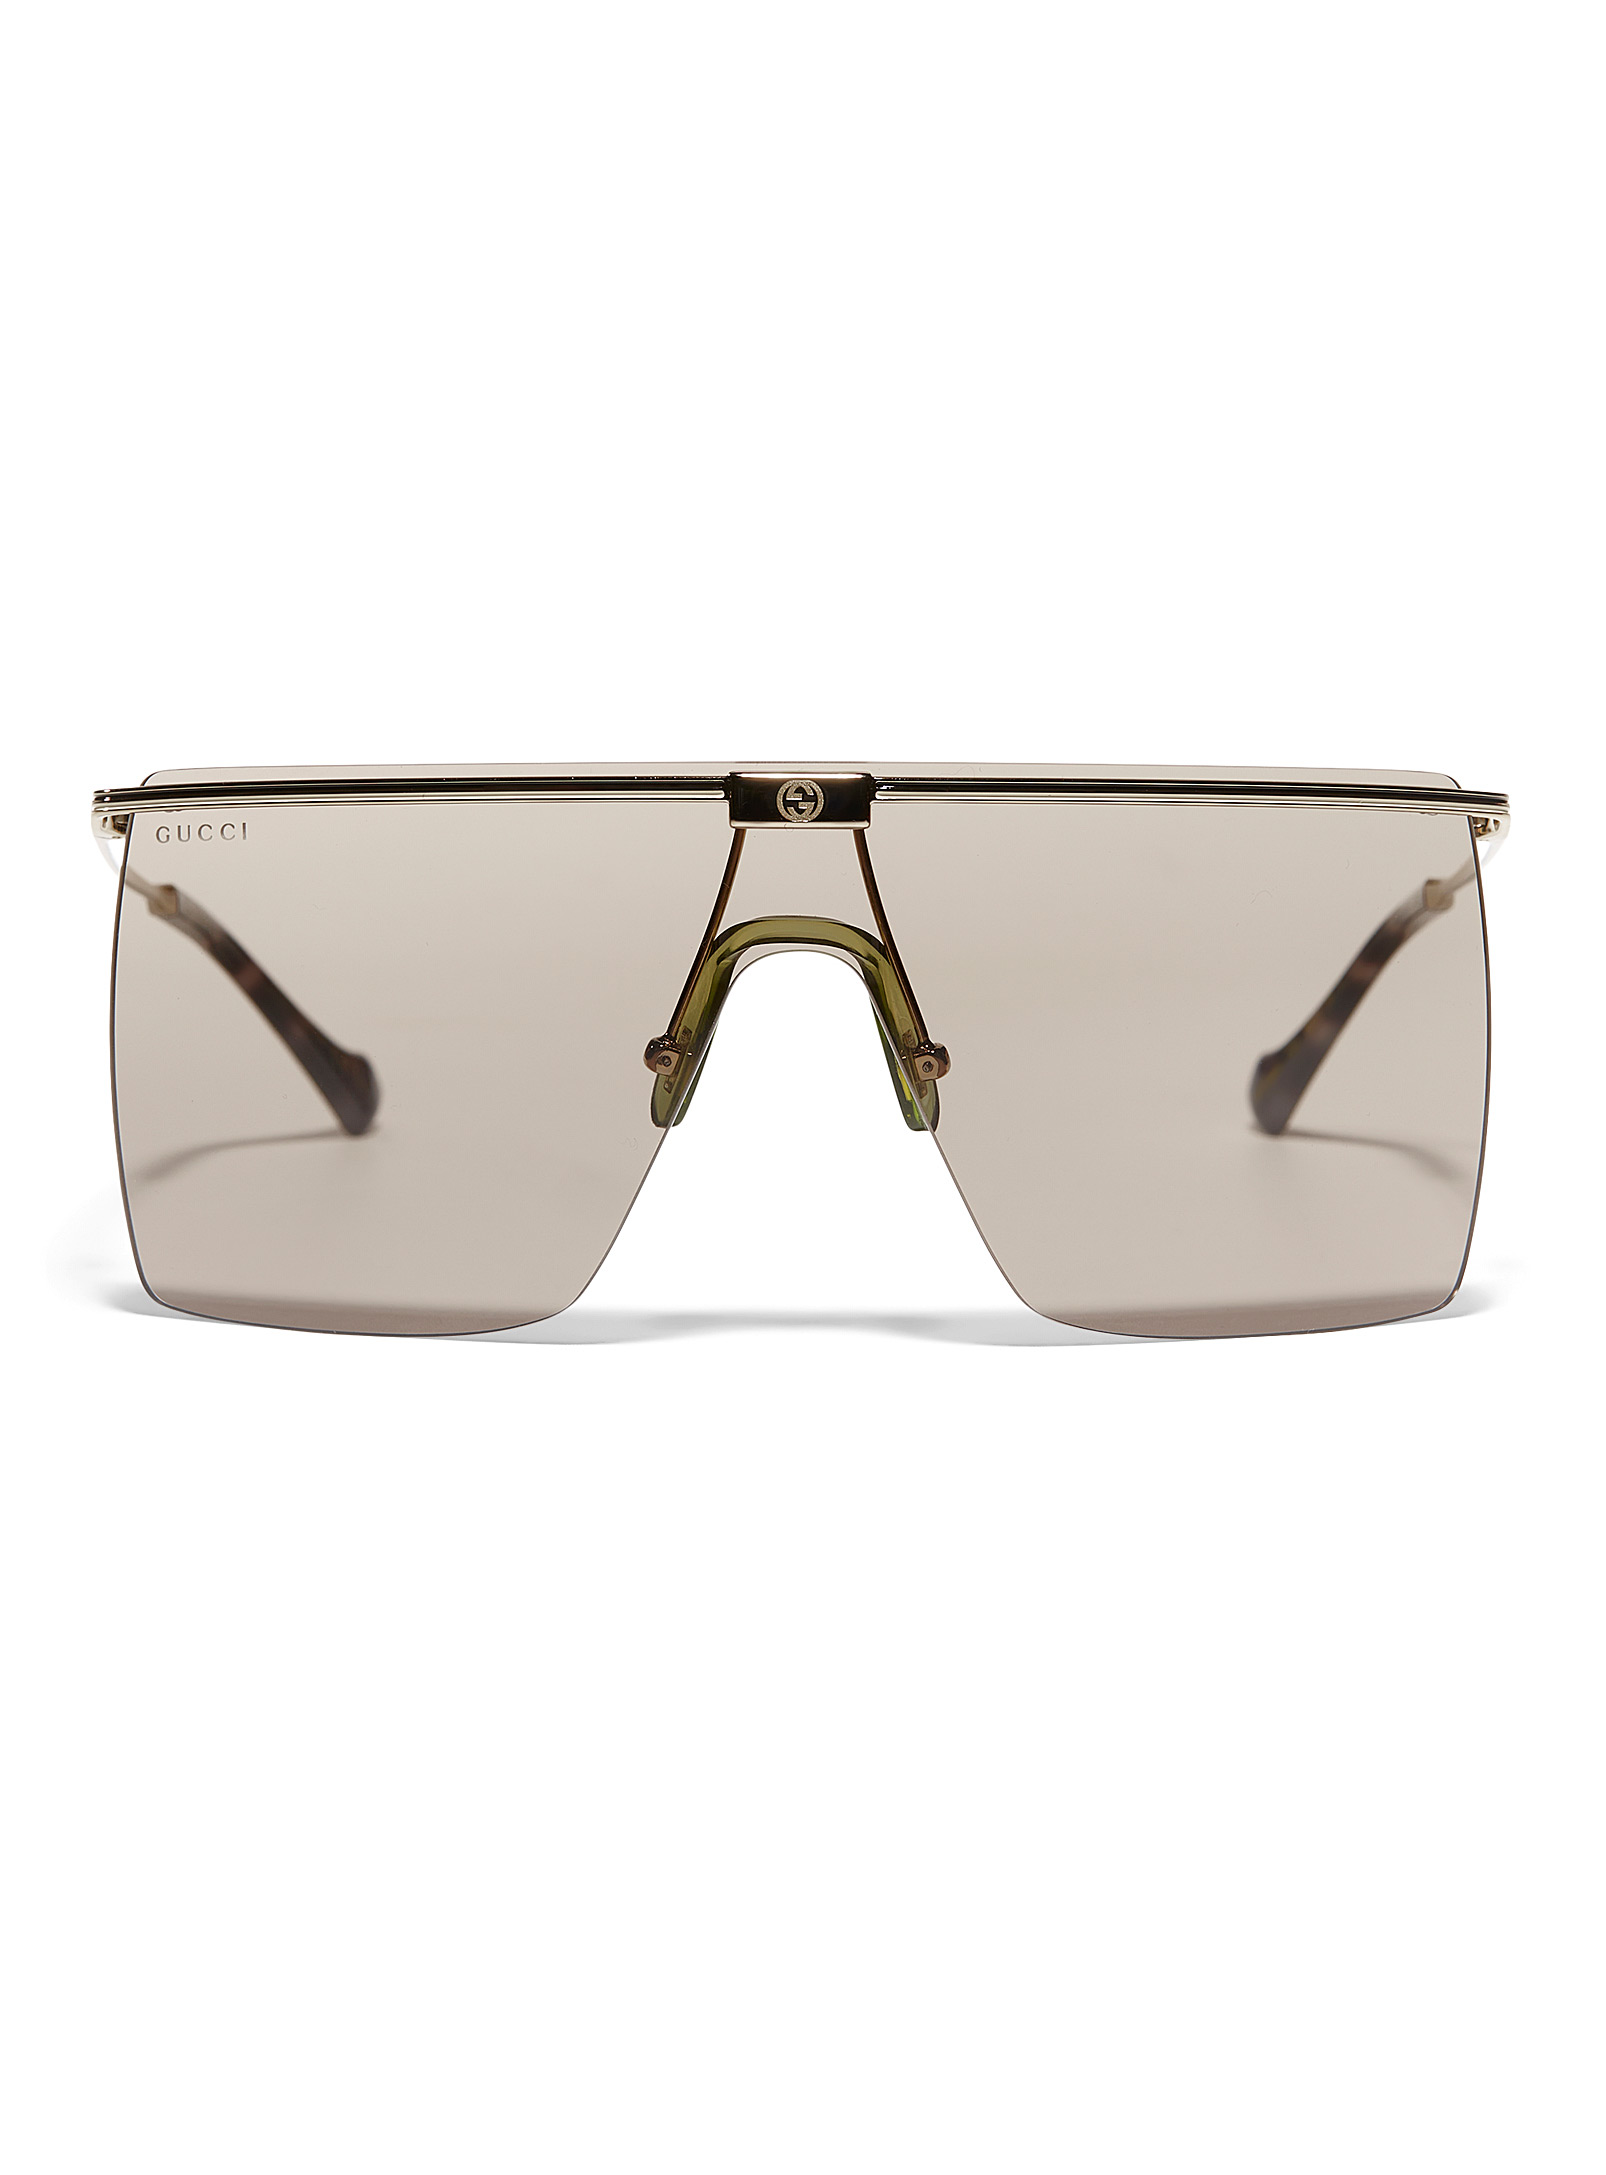 Gucci - Sleek shield sunglasses